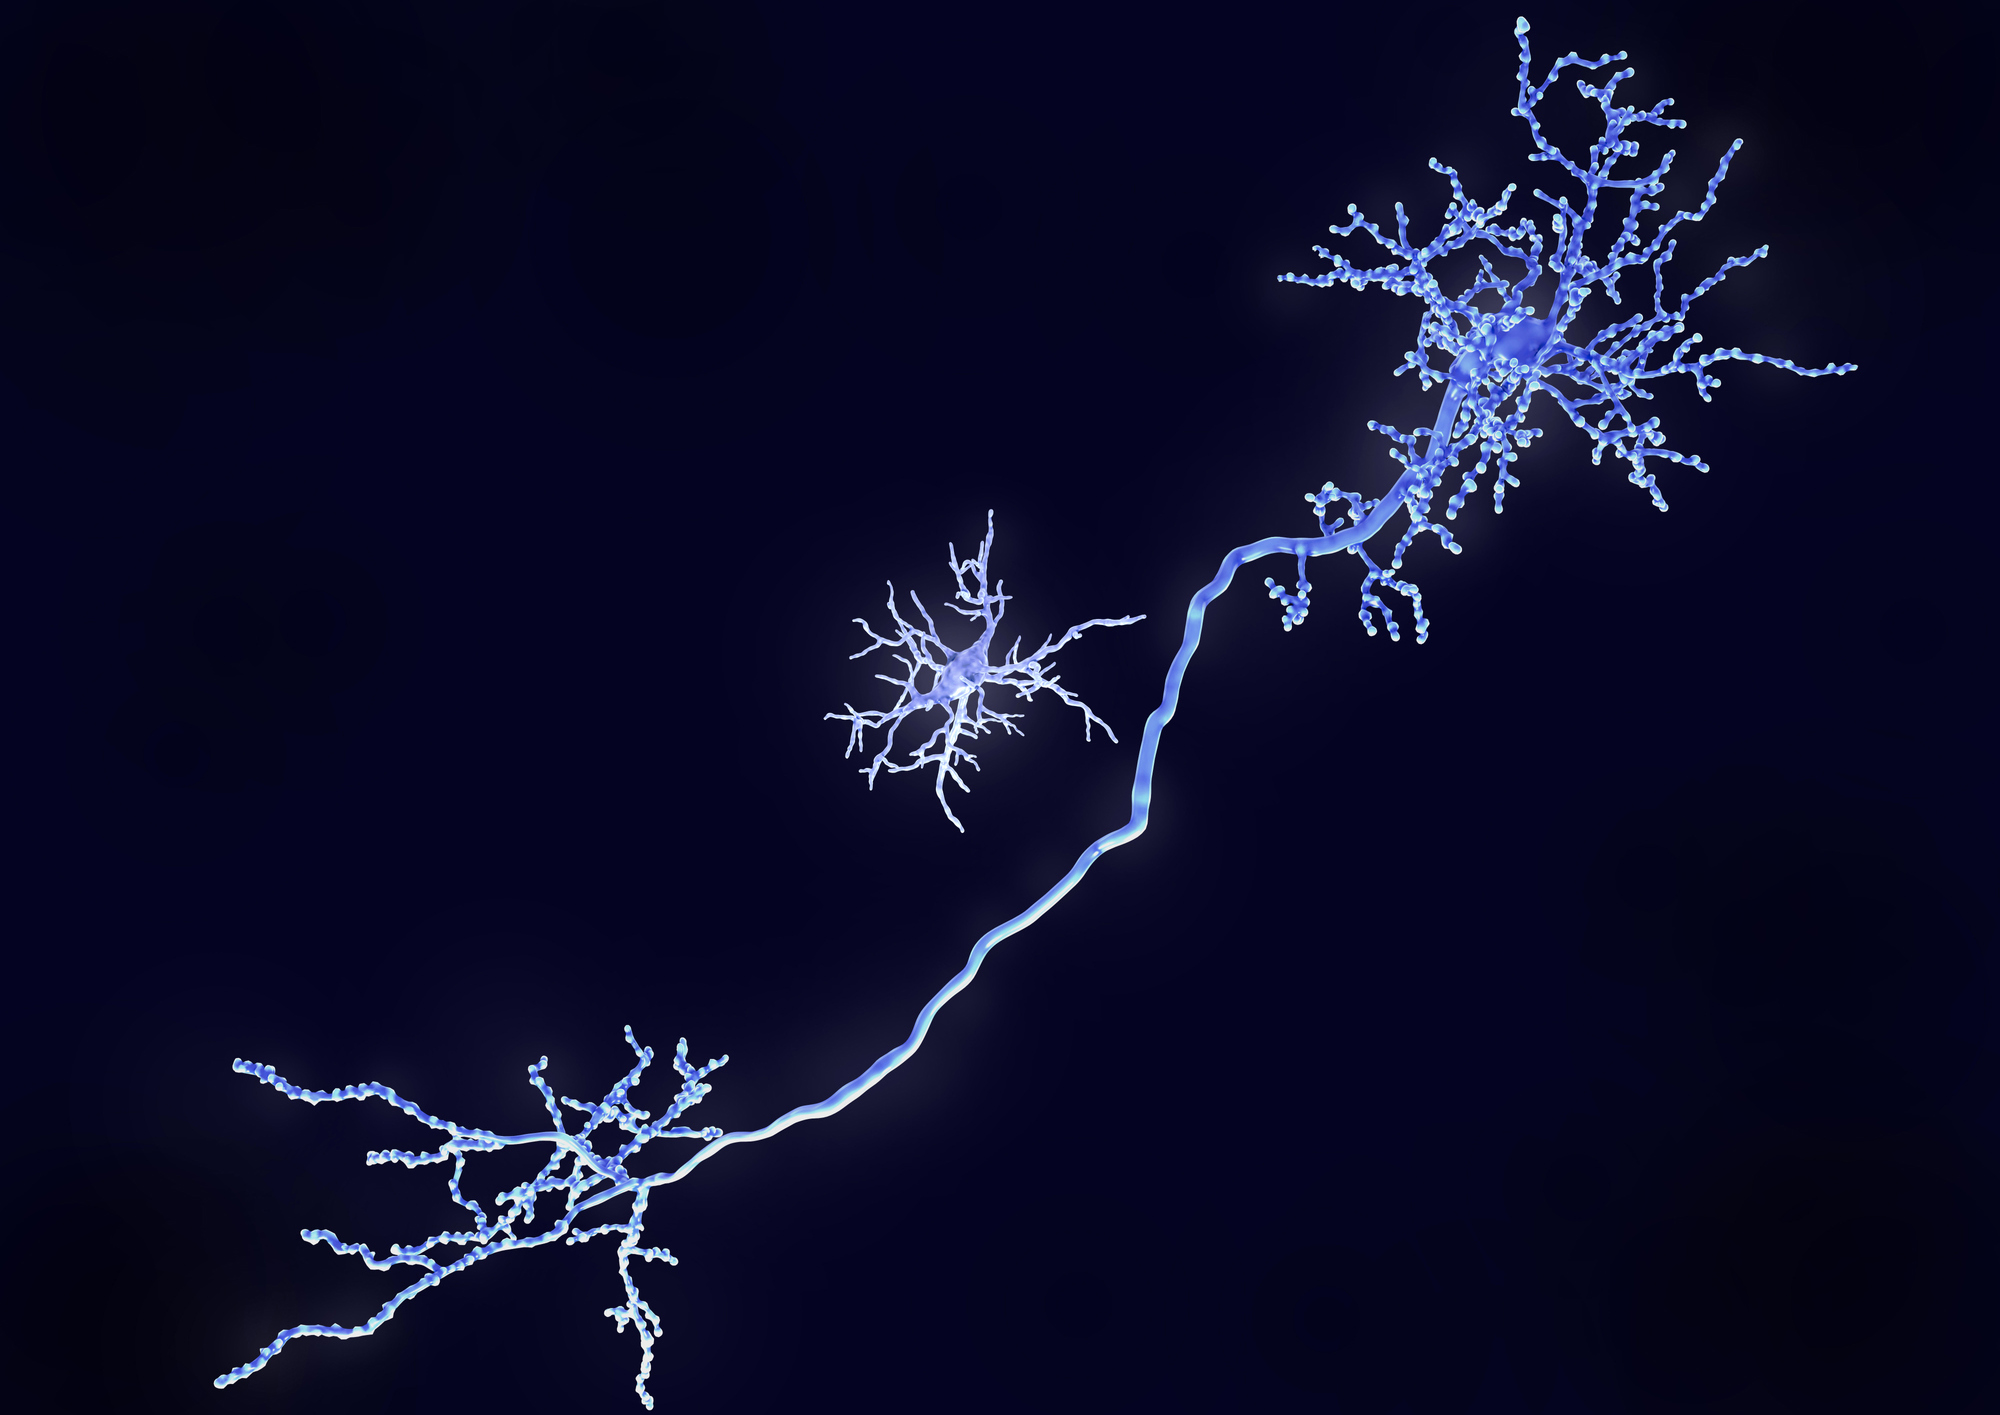 Microscopic view of Microglia cell and pyramidal neuron.